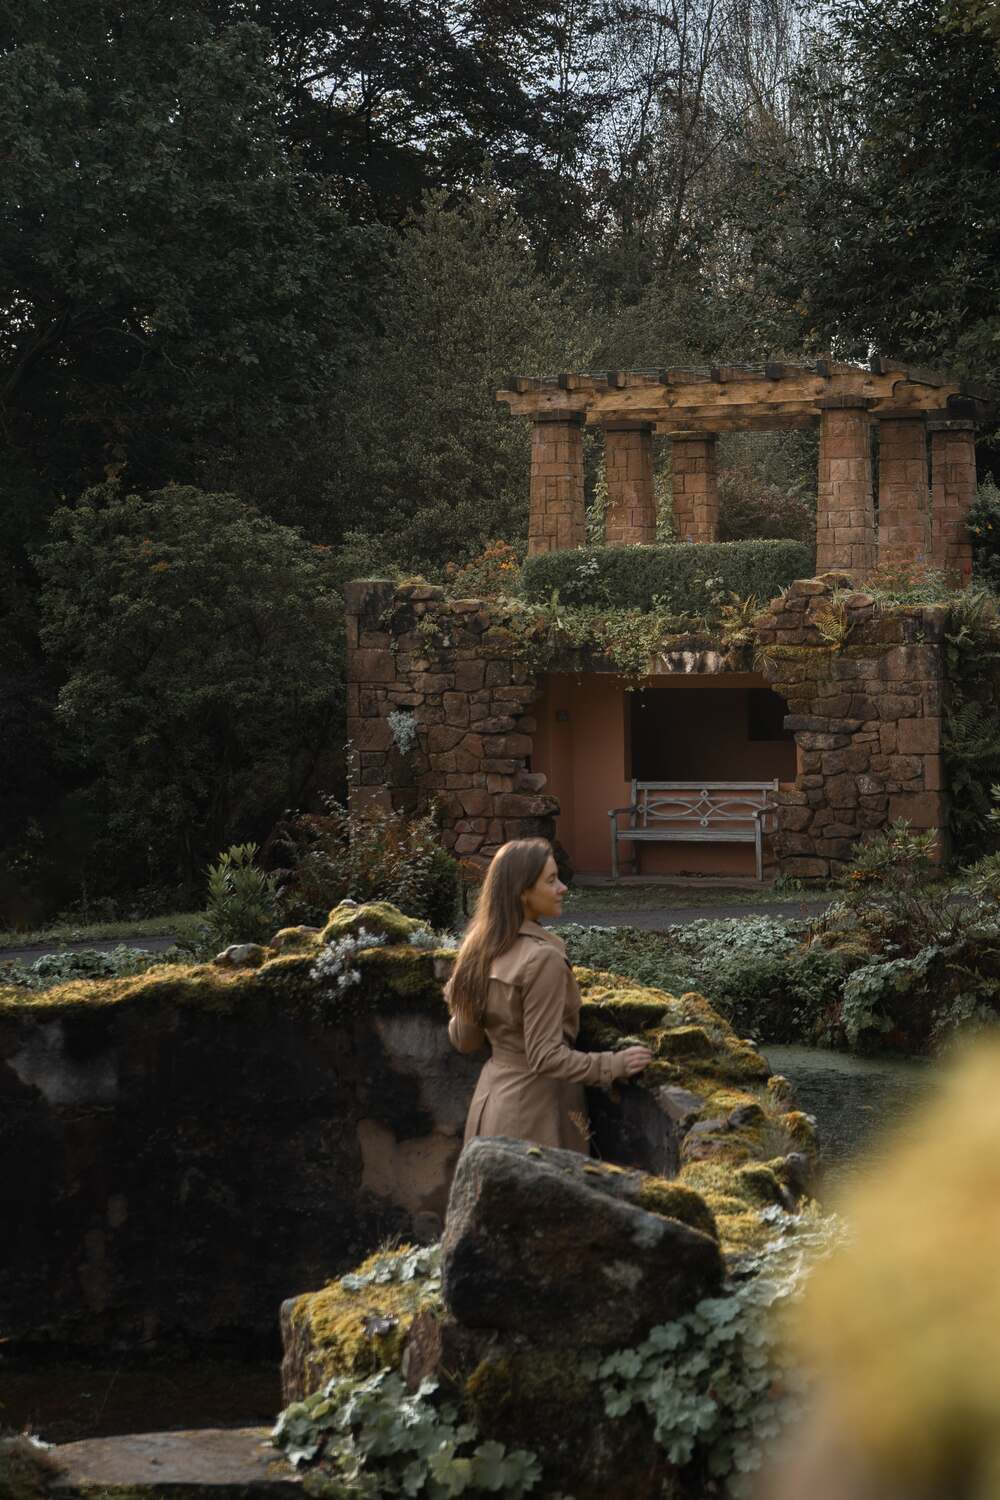 Jessie at Italian Gardens